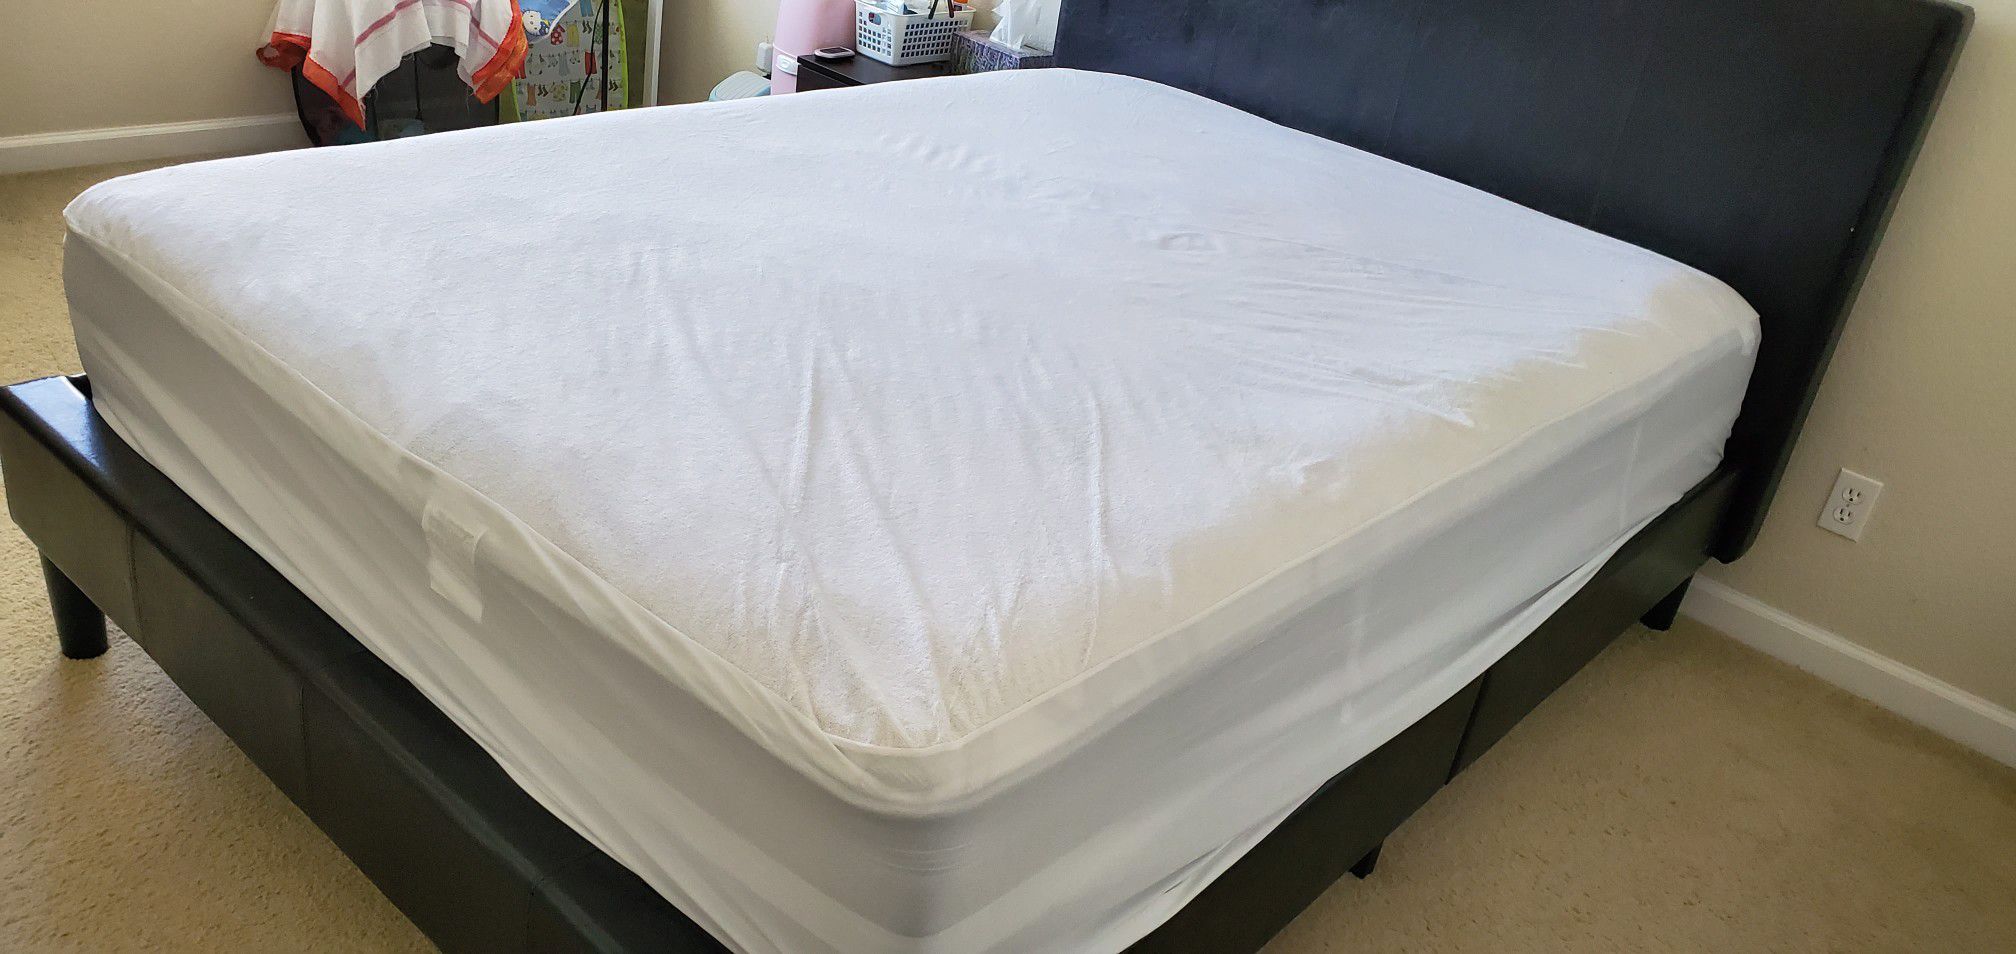 Zinus queen leather bed frame with Simmons beautyrest queen mattress